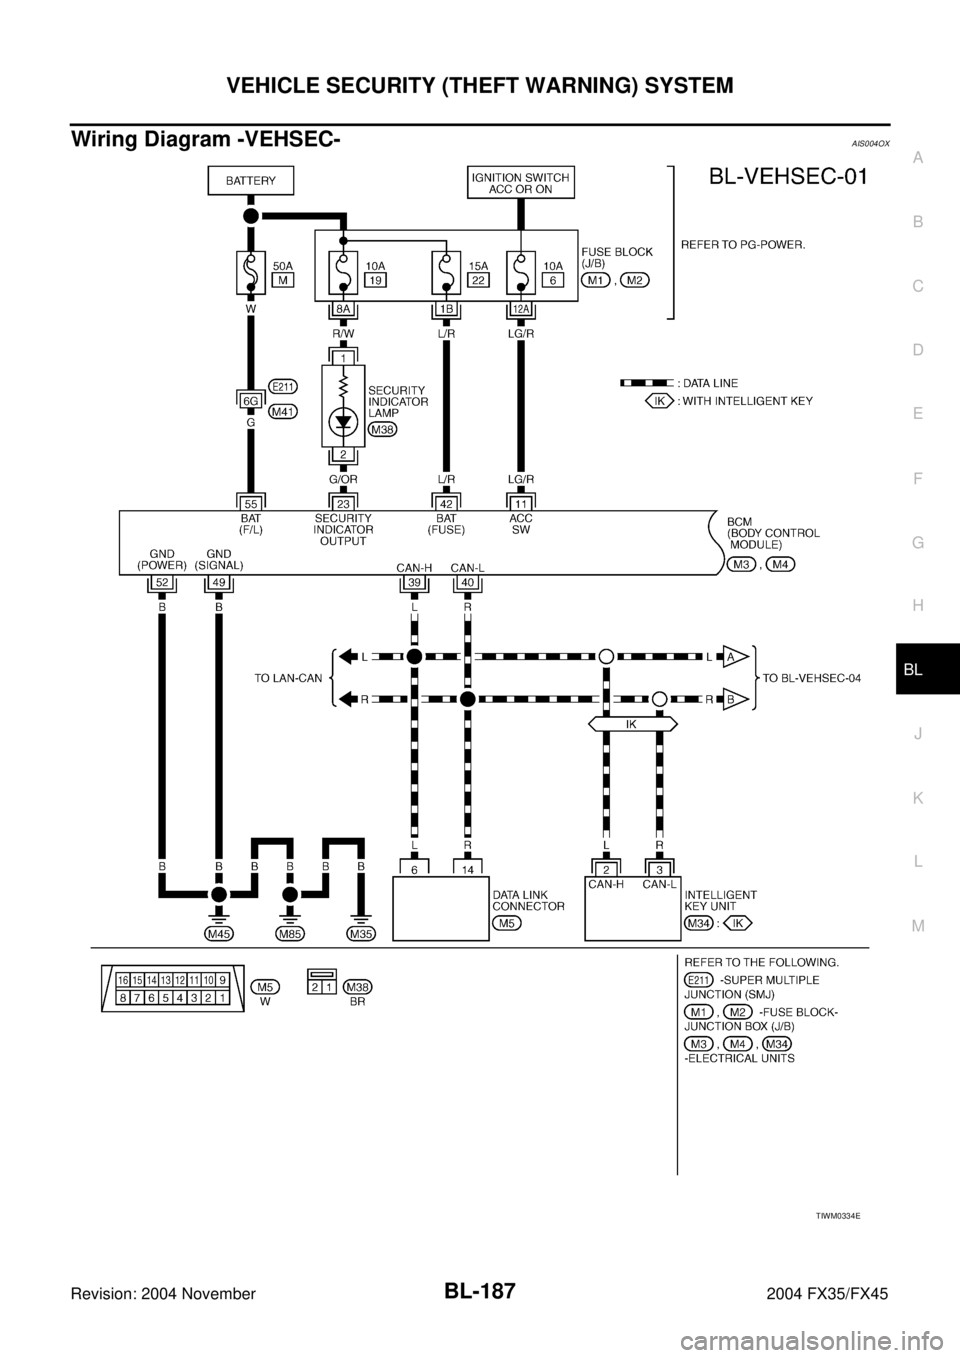 INFINITI FX35 2004  Service Manual VEHICLE SECURITY (THEFT WARNING) SYSTEM
BL-187
C
D
E
F
G
H
J
K
L
MA
B
BL
Revision: 2004 November 2004 FX35/FX45
Wiring Diagram -VEHSEC-AIS004OX
TIWM0334E 